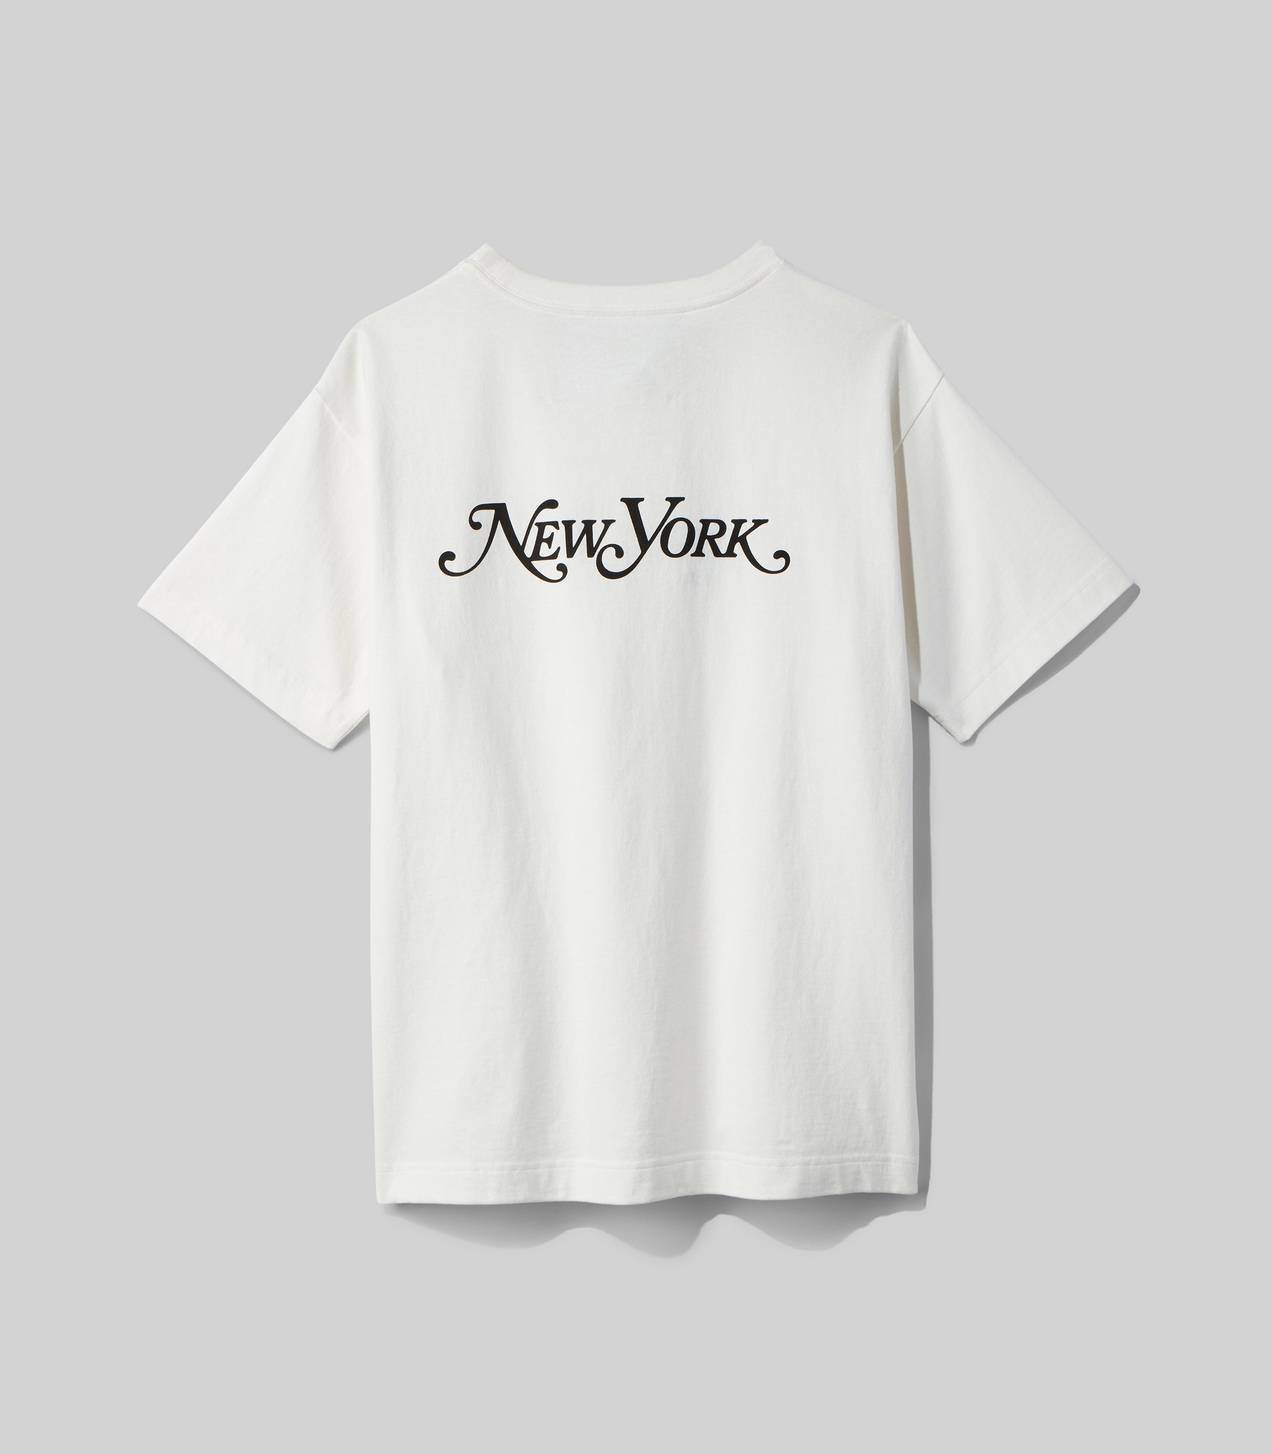 New York Magazine® X Marc Jacobs The Logo T-shirt